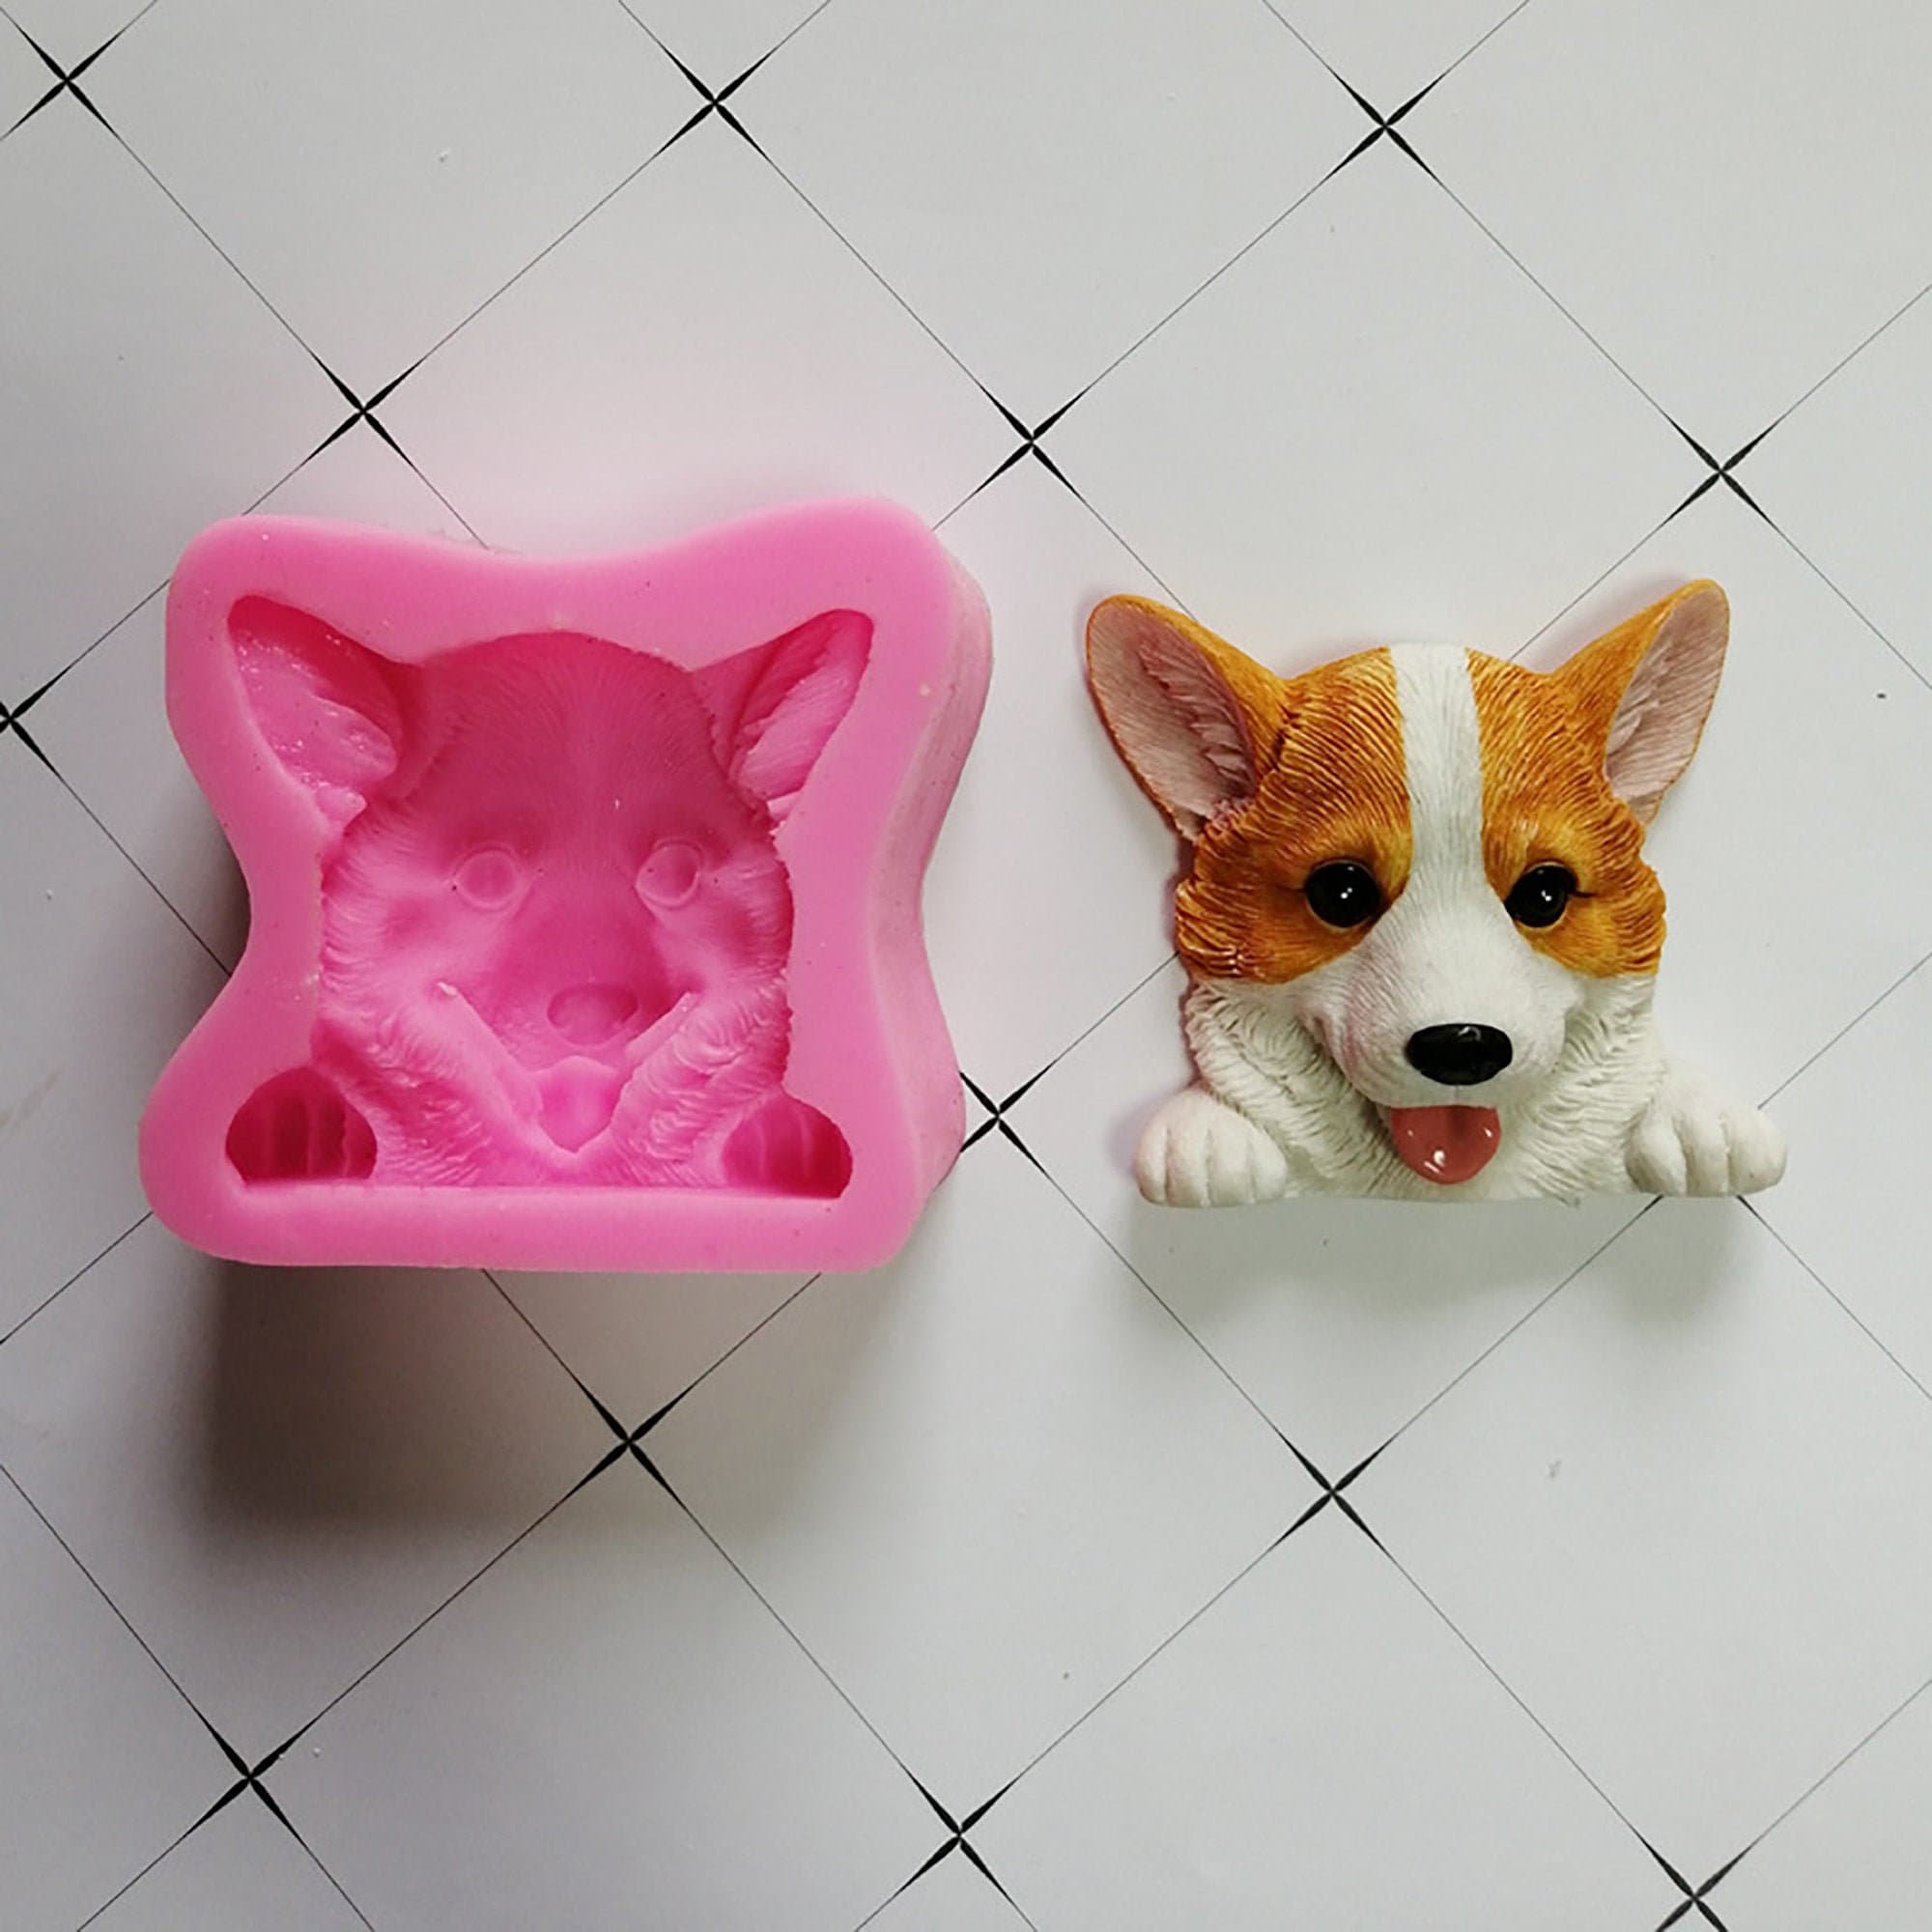 Sleeping Corgi Dog Mold – The Crafts and Glitter Shop